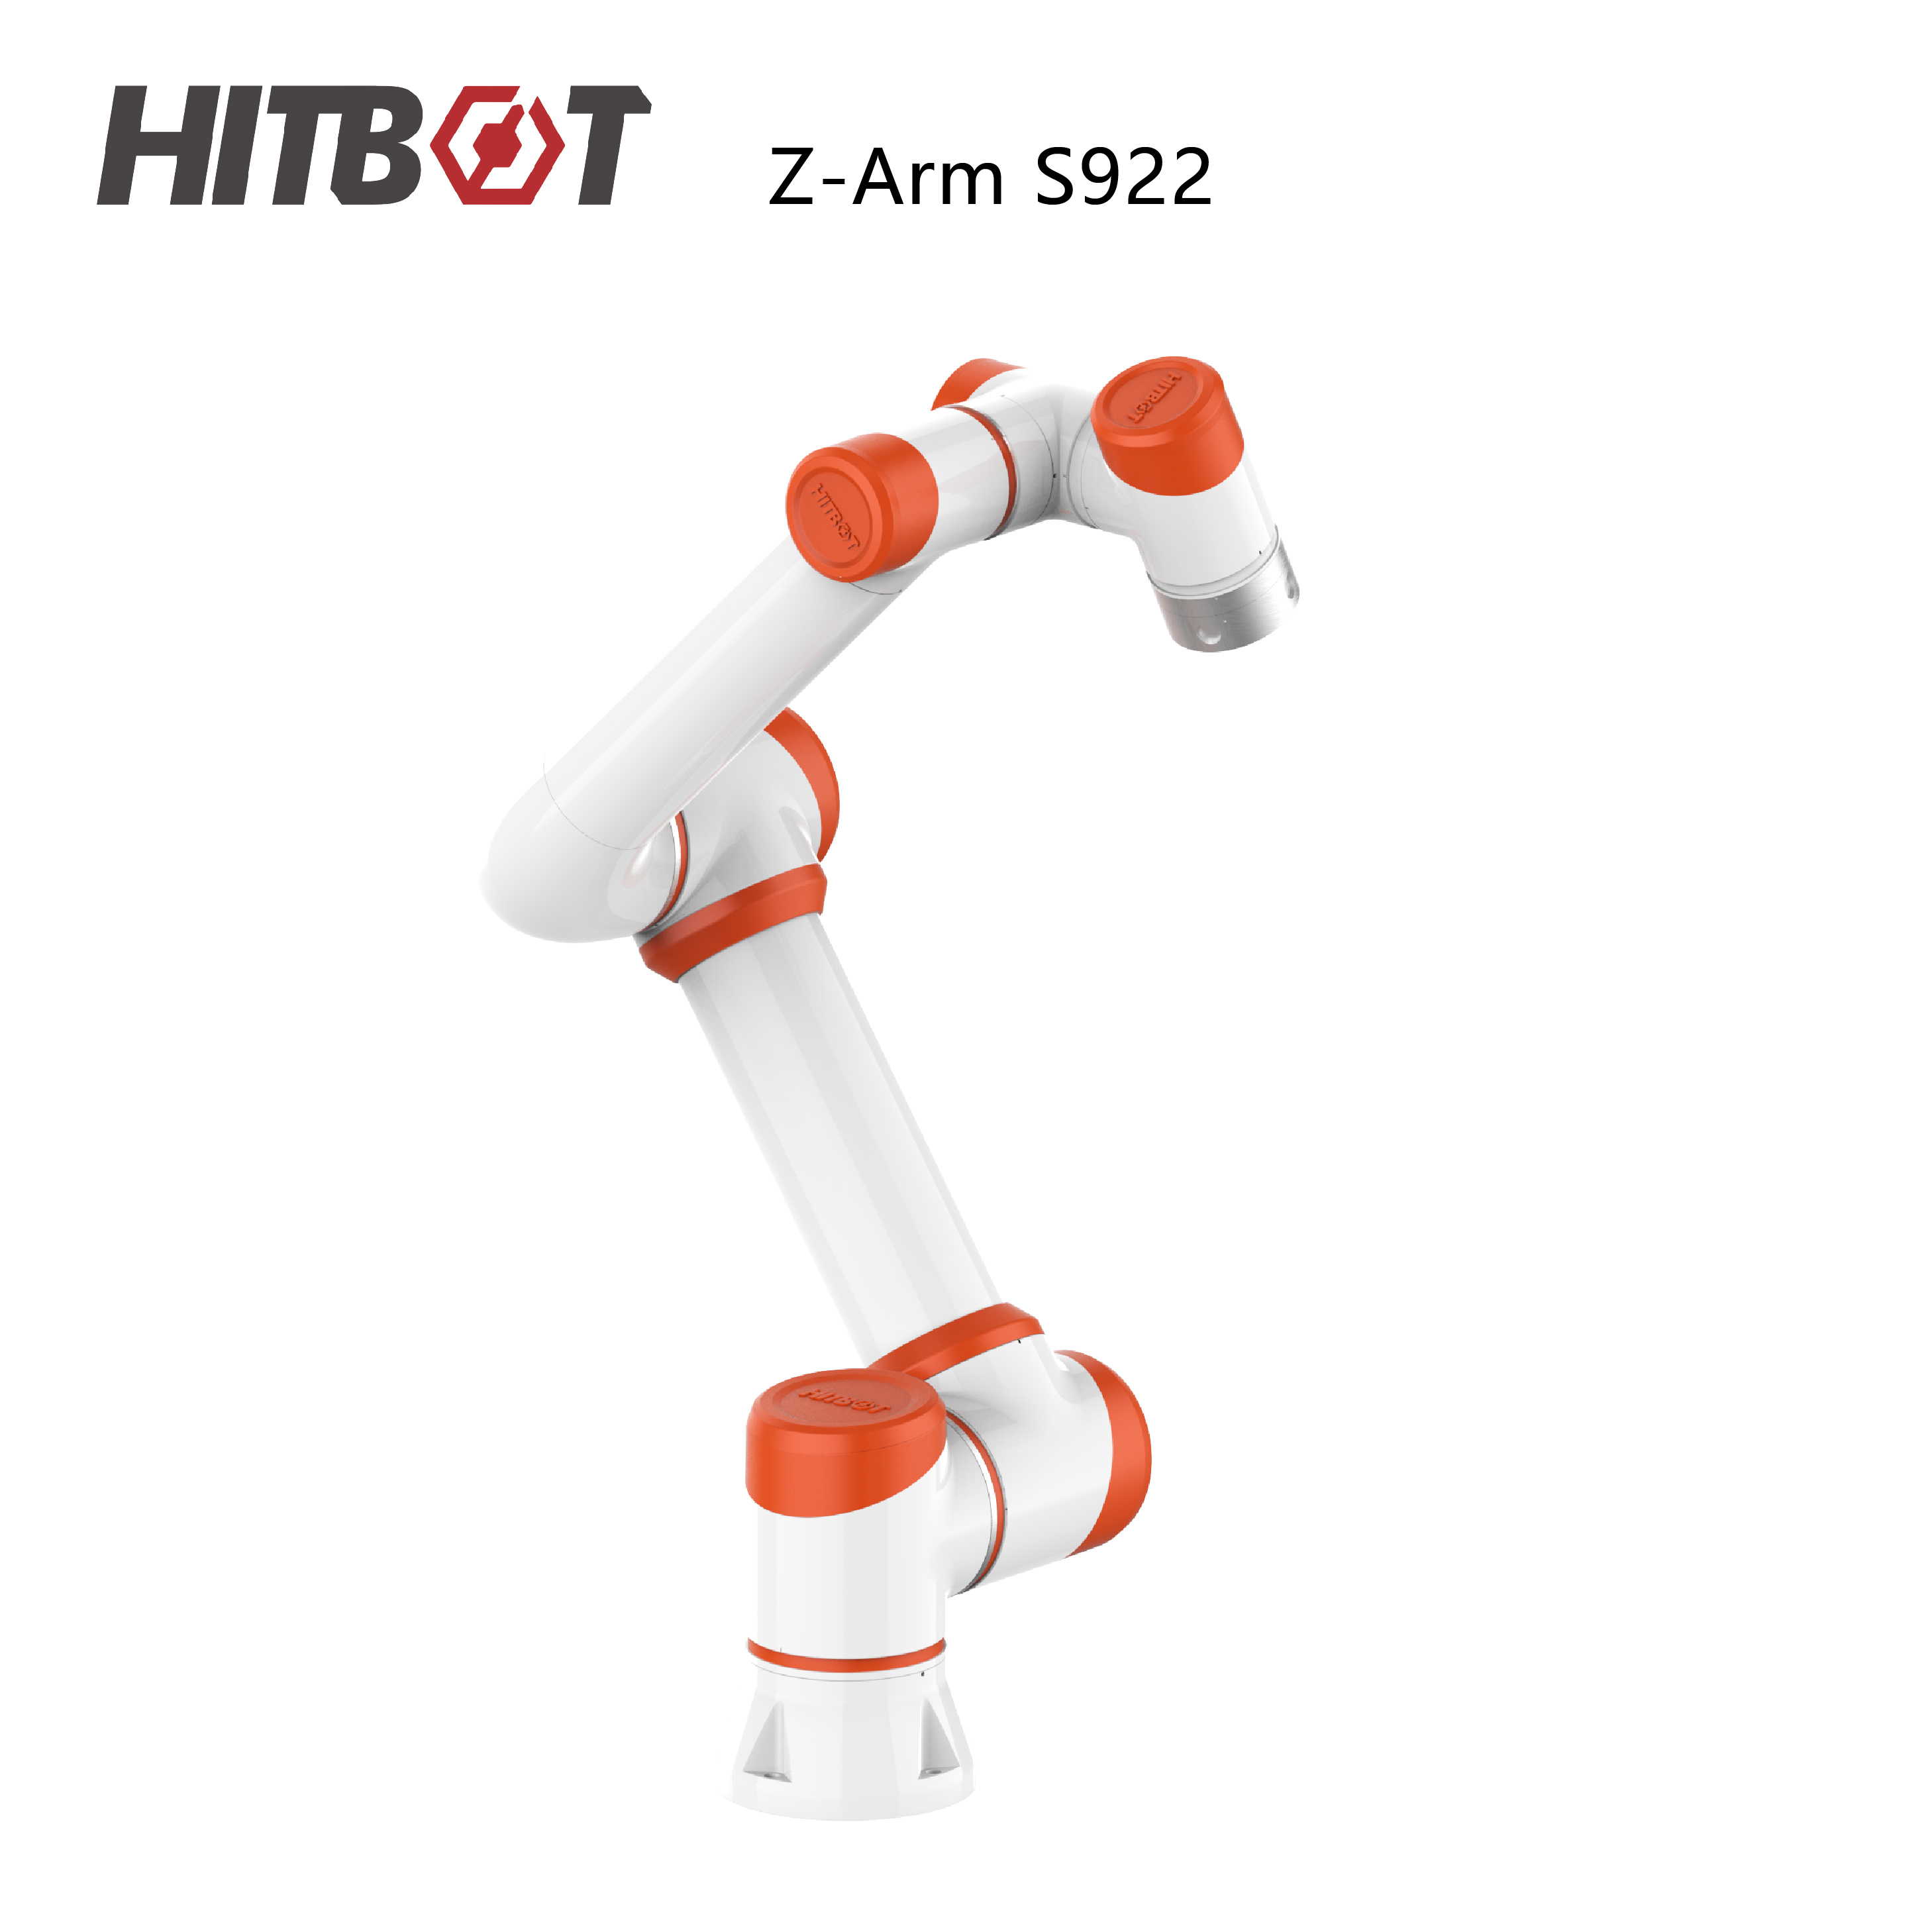 cobot,cobot robot,robot arm,6-axis robot,collaborative robot,industrial robot